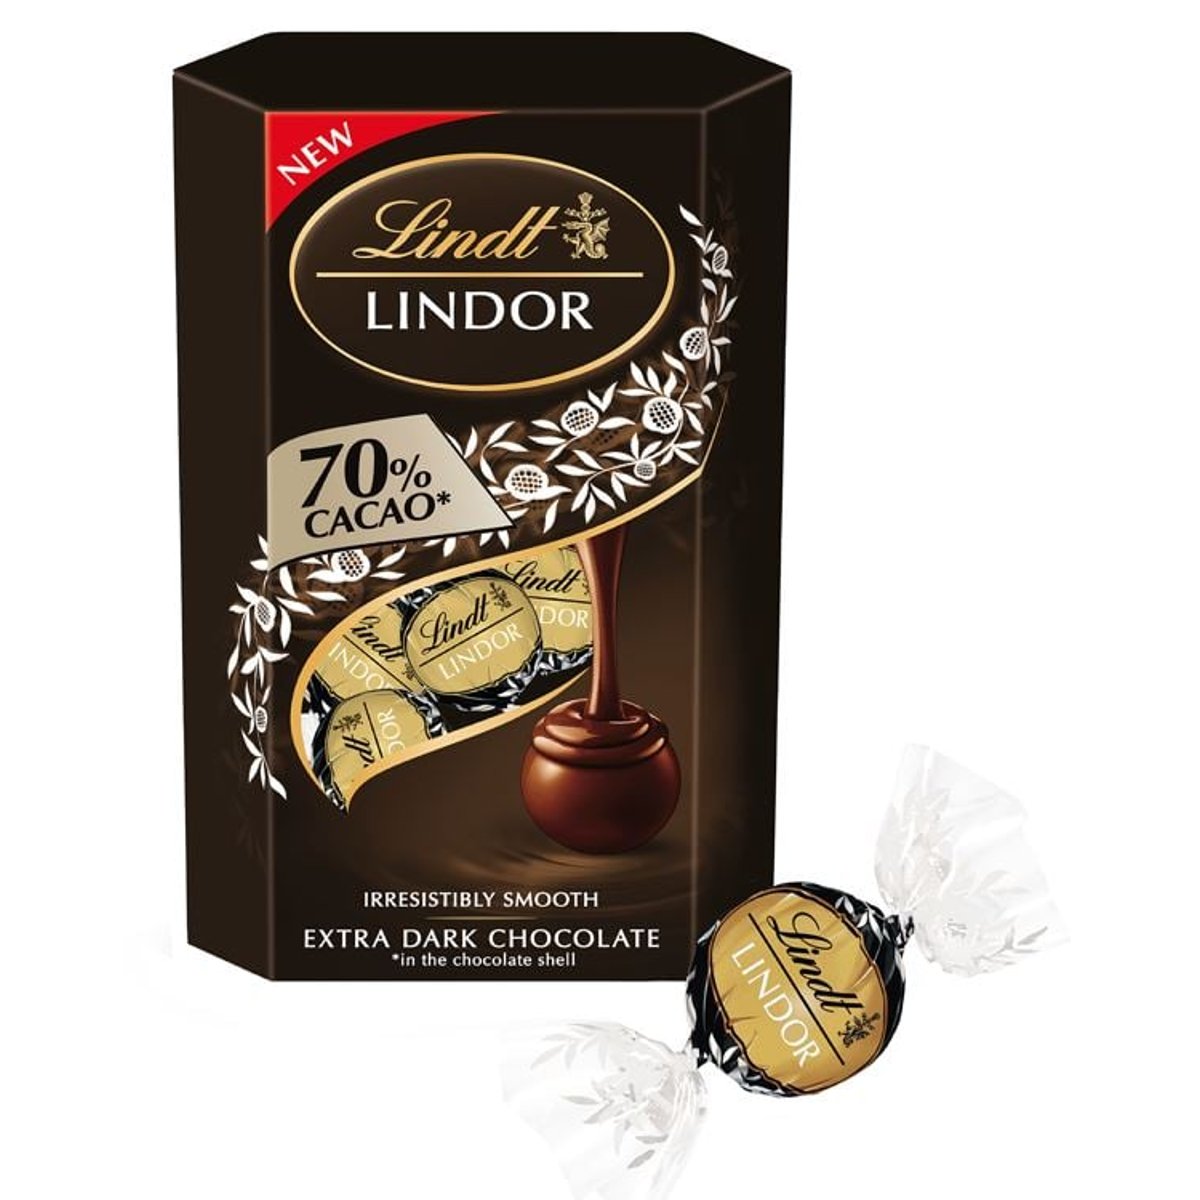 Lindt LINDOR pralinky Hořká čokoláda 70%